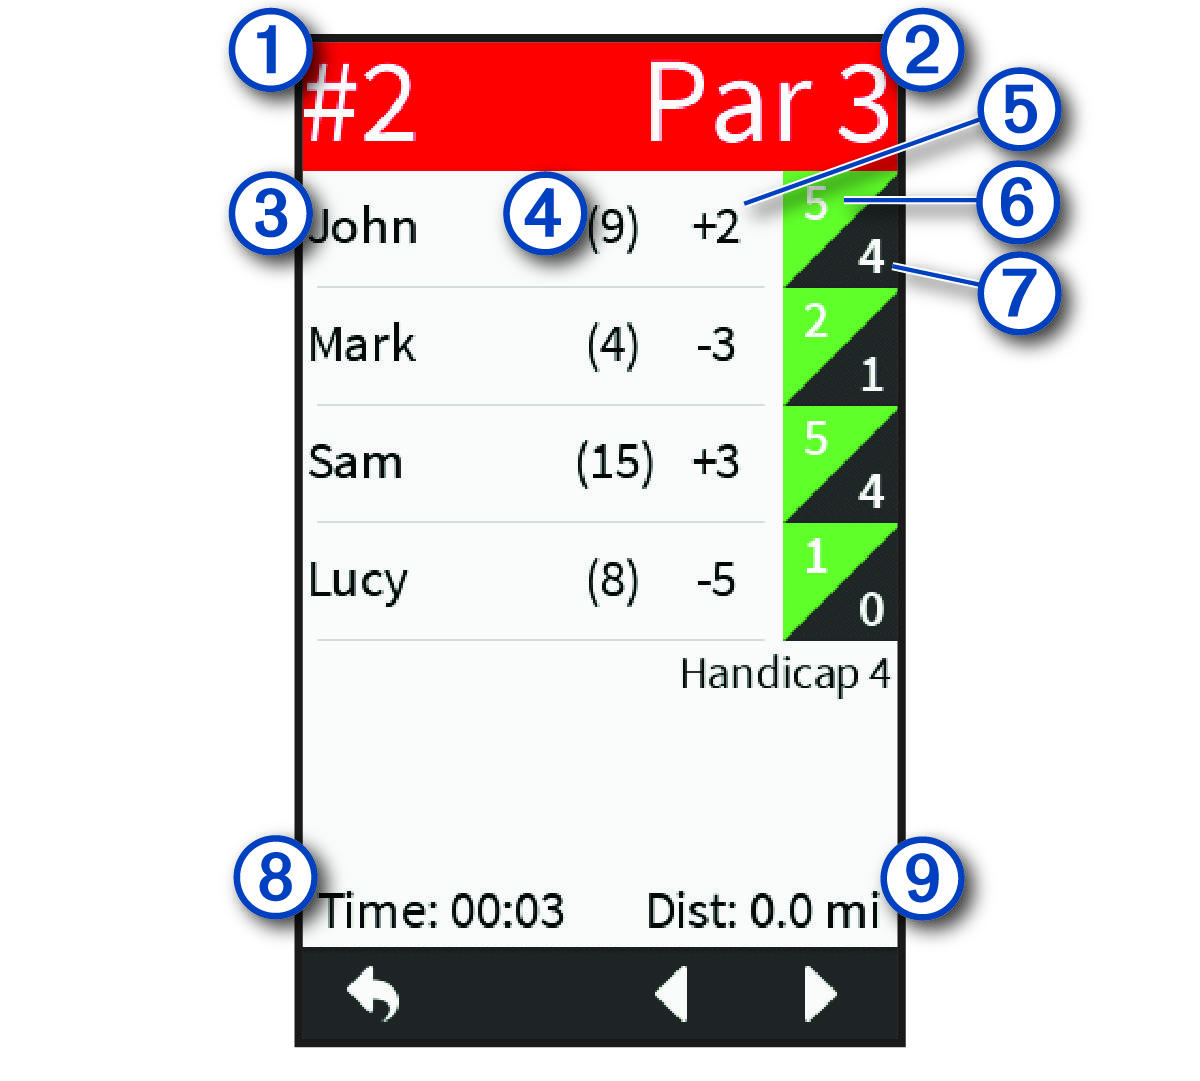 Screenshot of the handicap scorecard with callouts